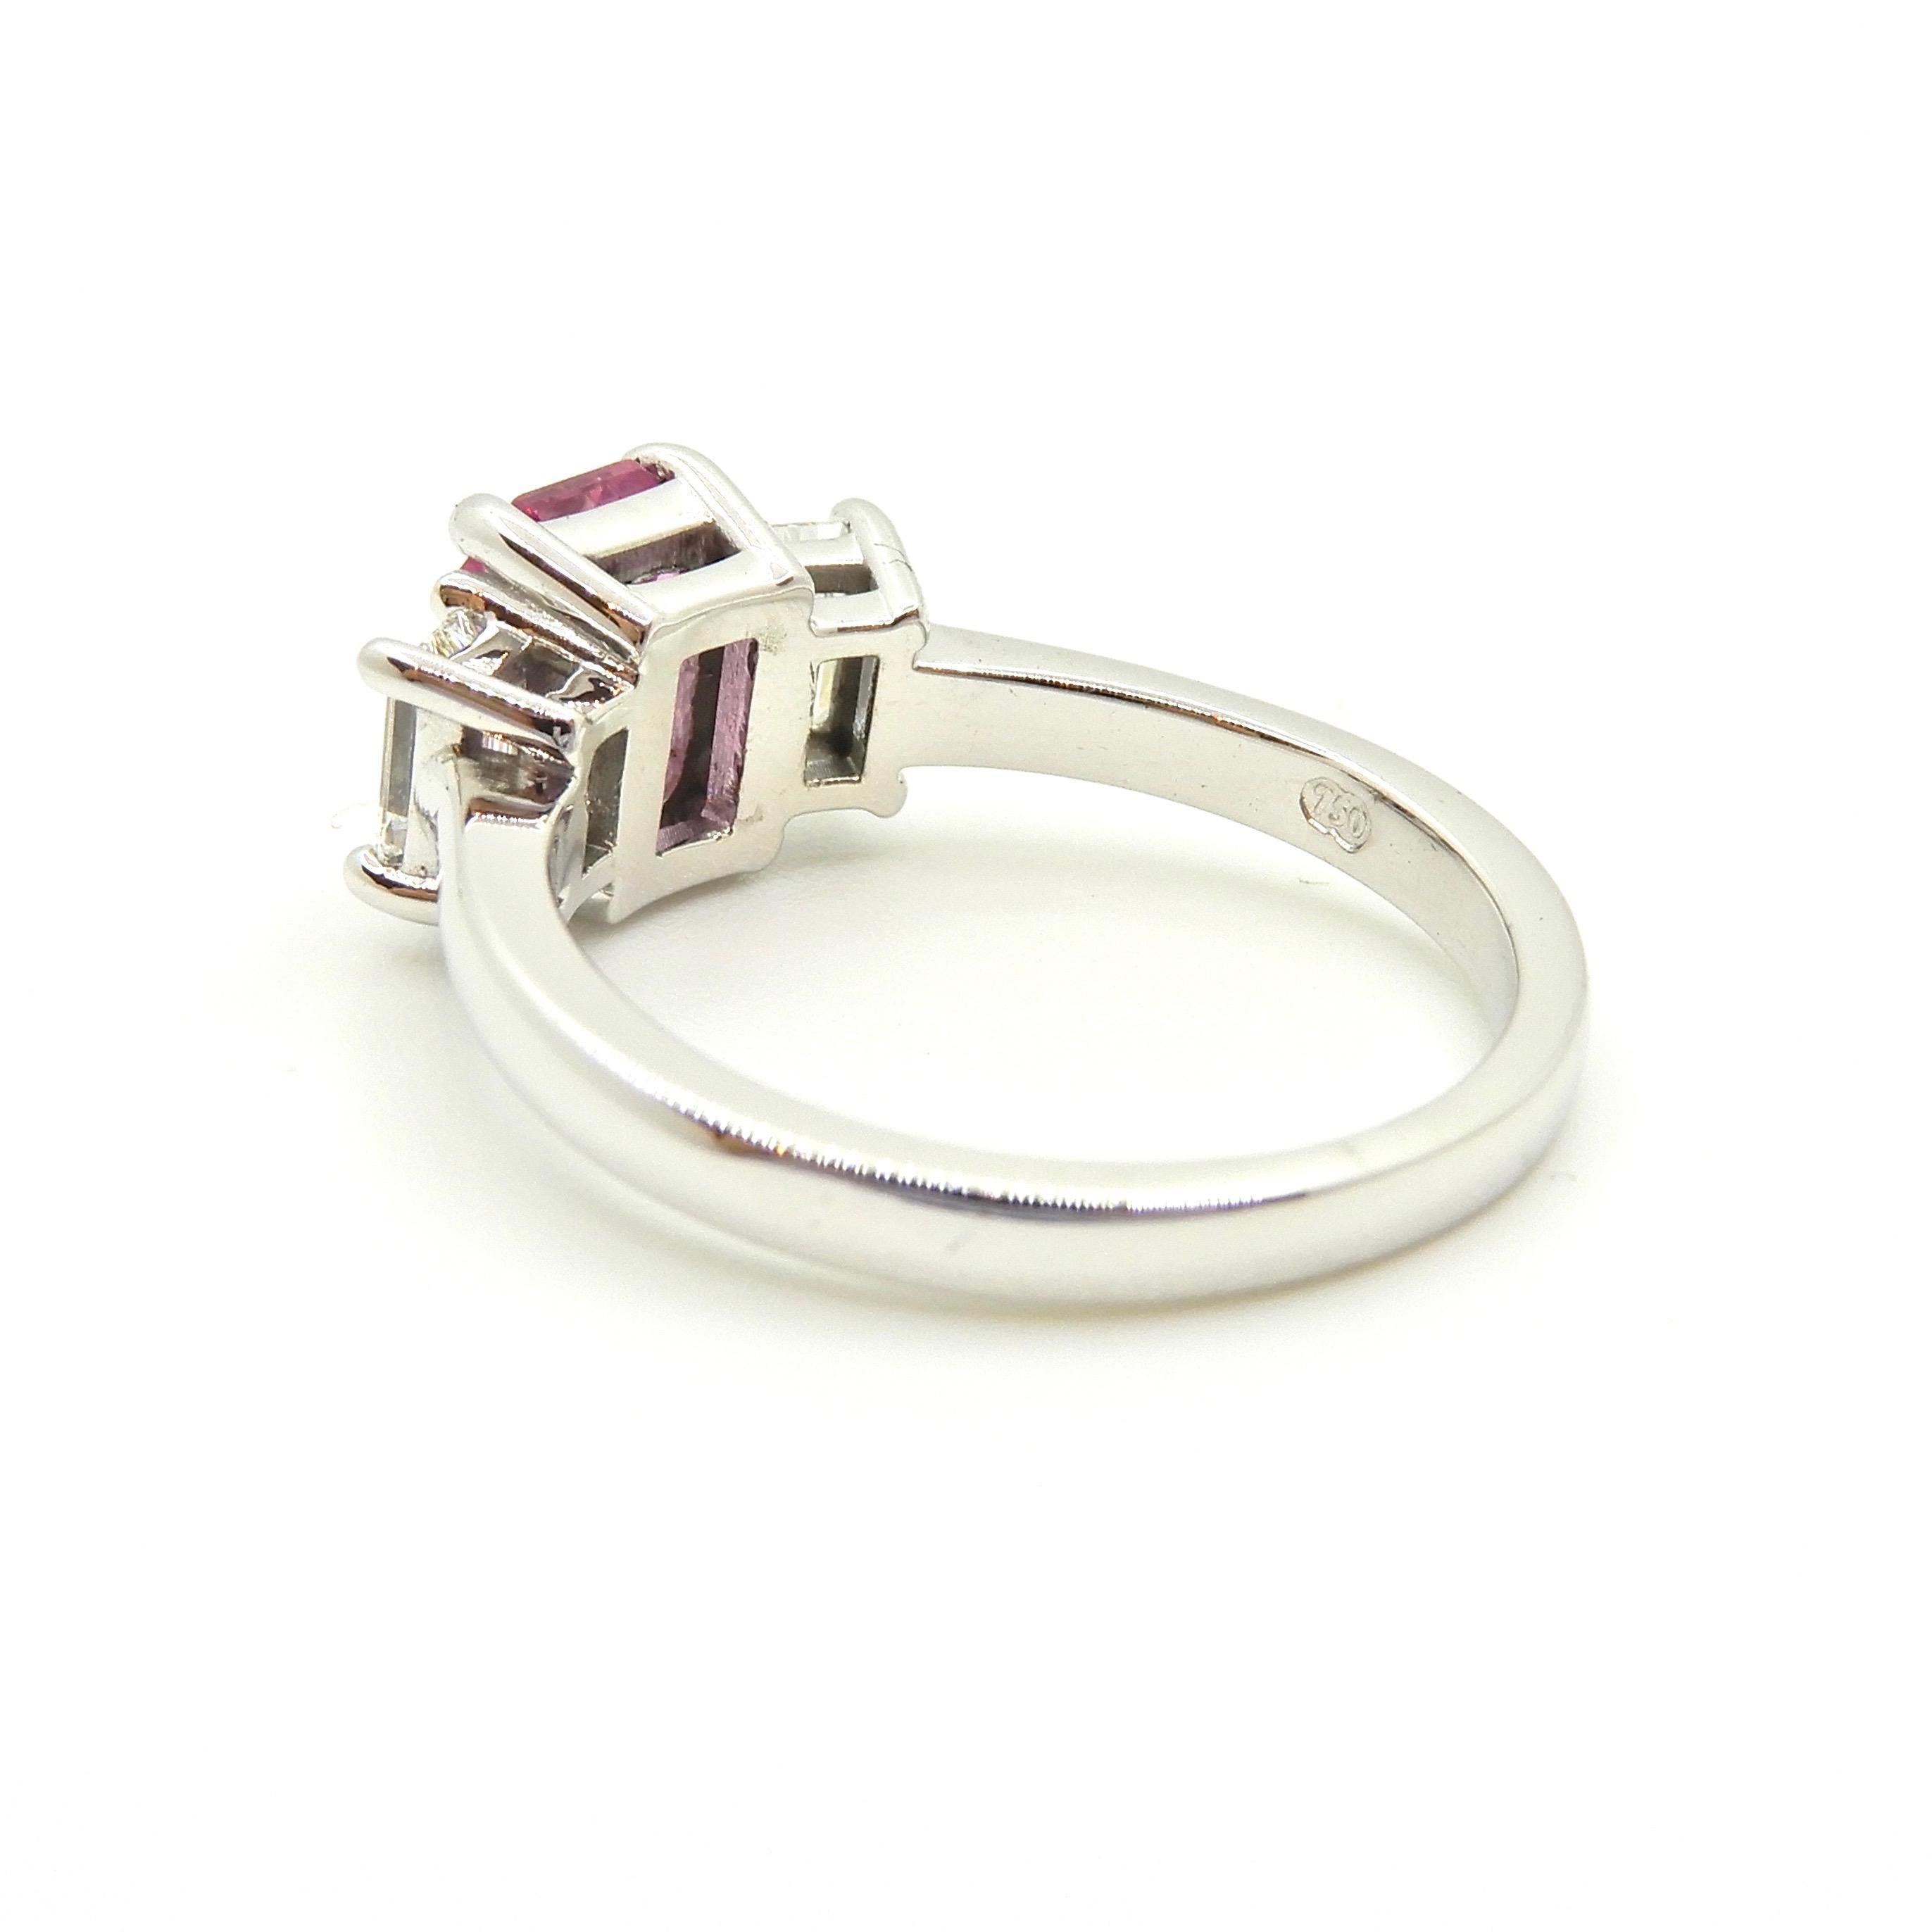 Women's 1.21 Carat Emerald Cut Pink Sapphire and Diamond Engagement Ring